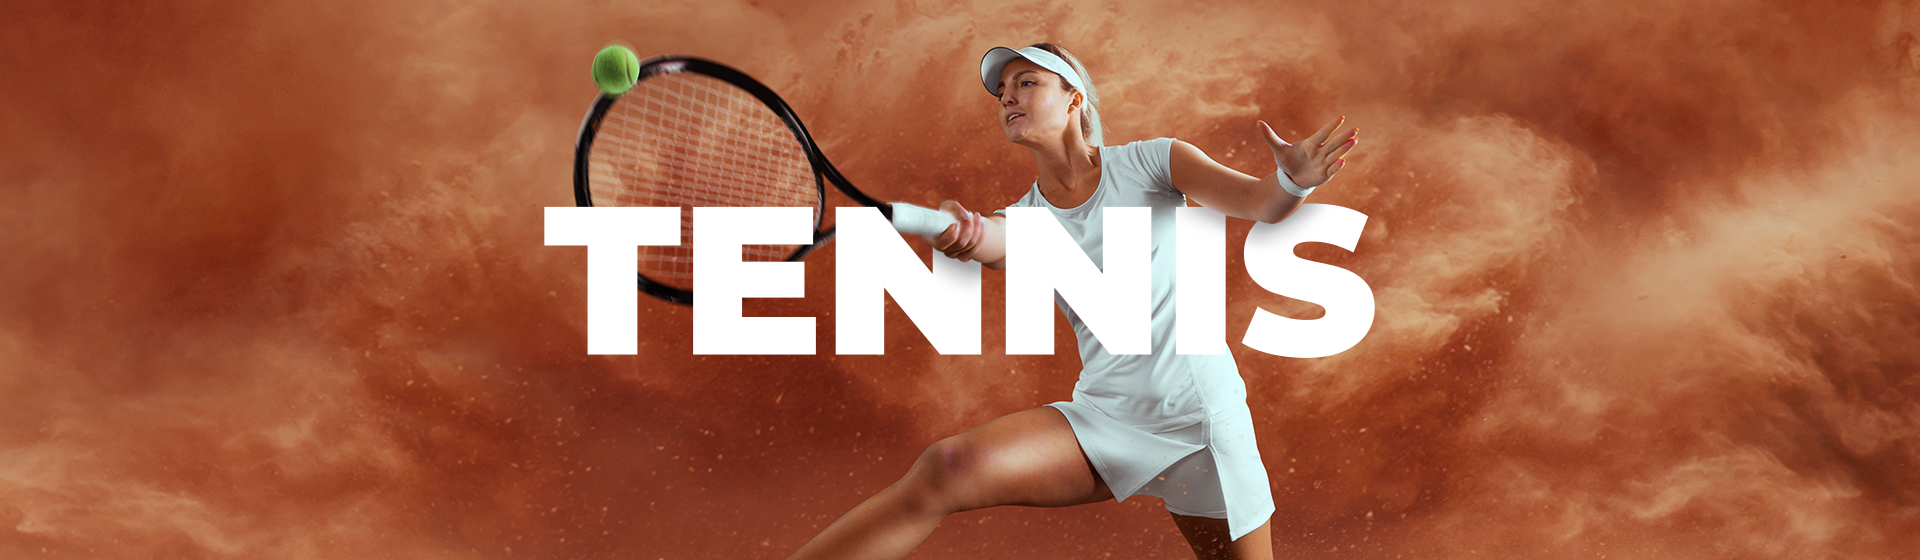 Tennis header image